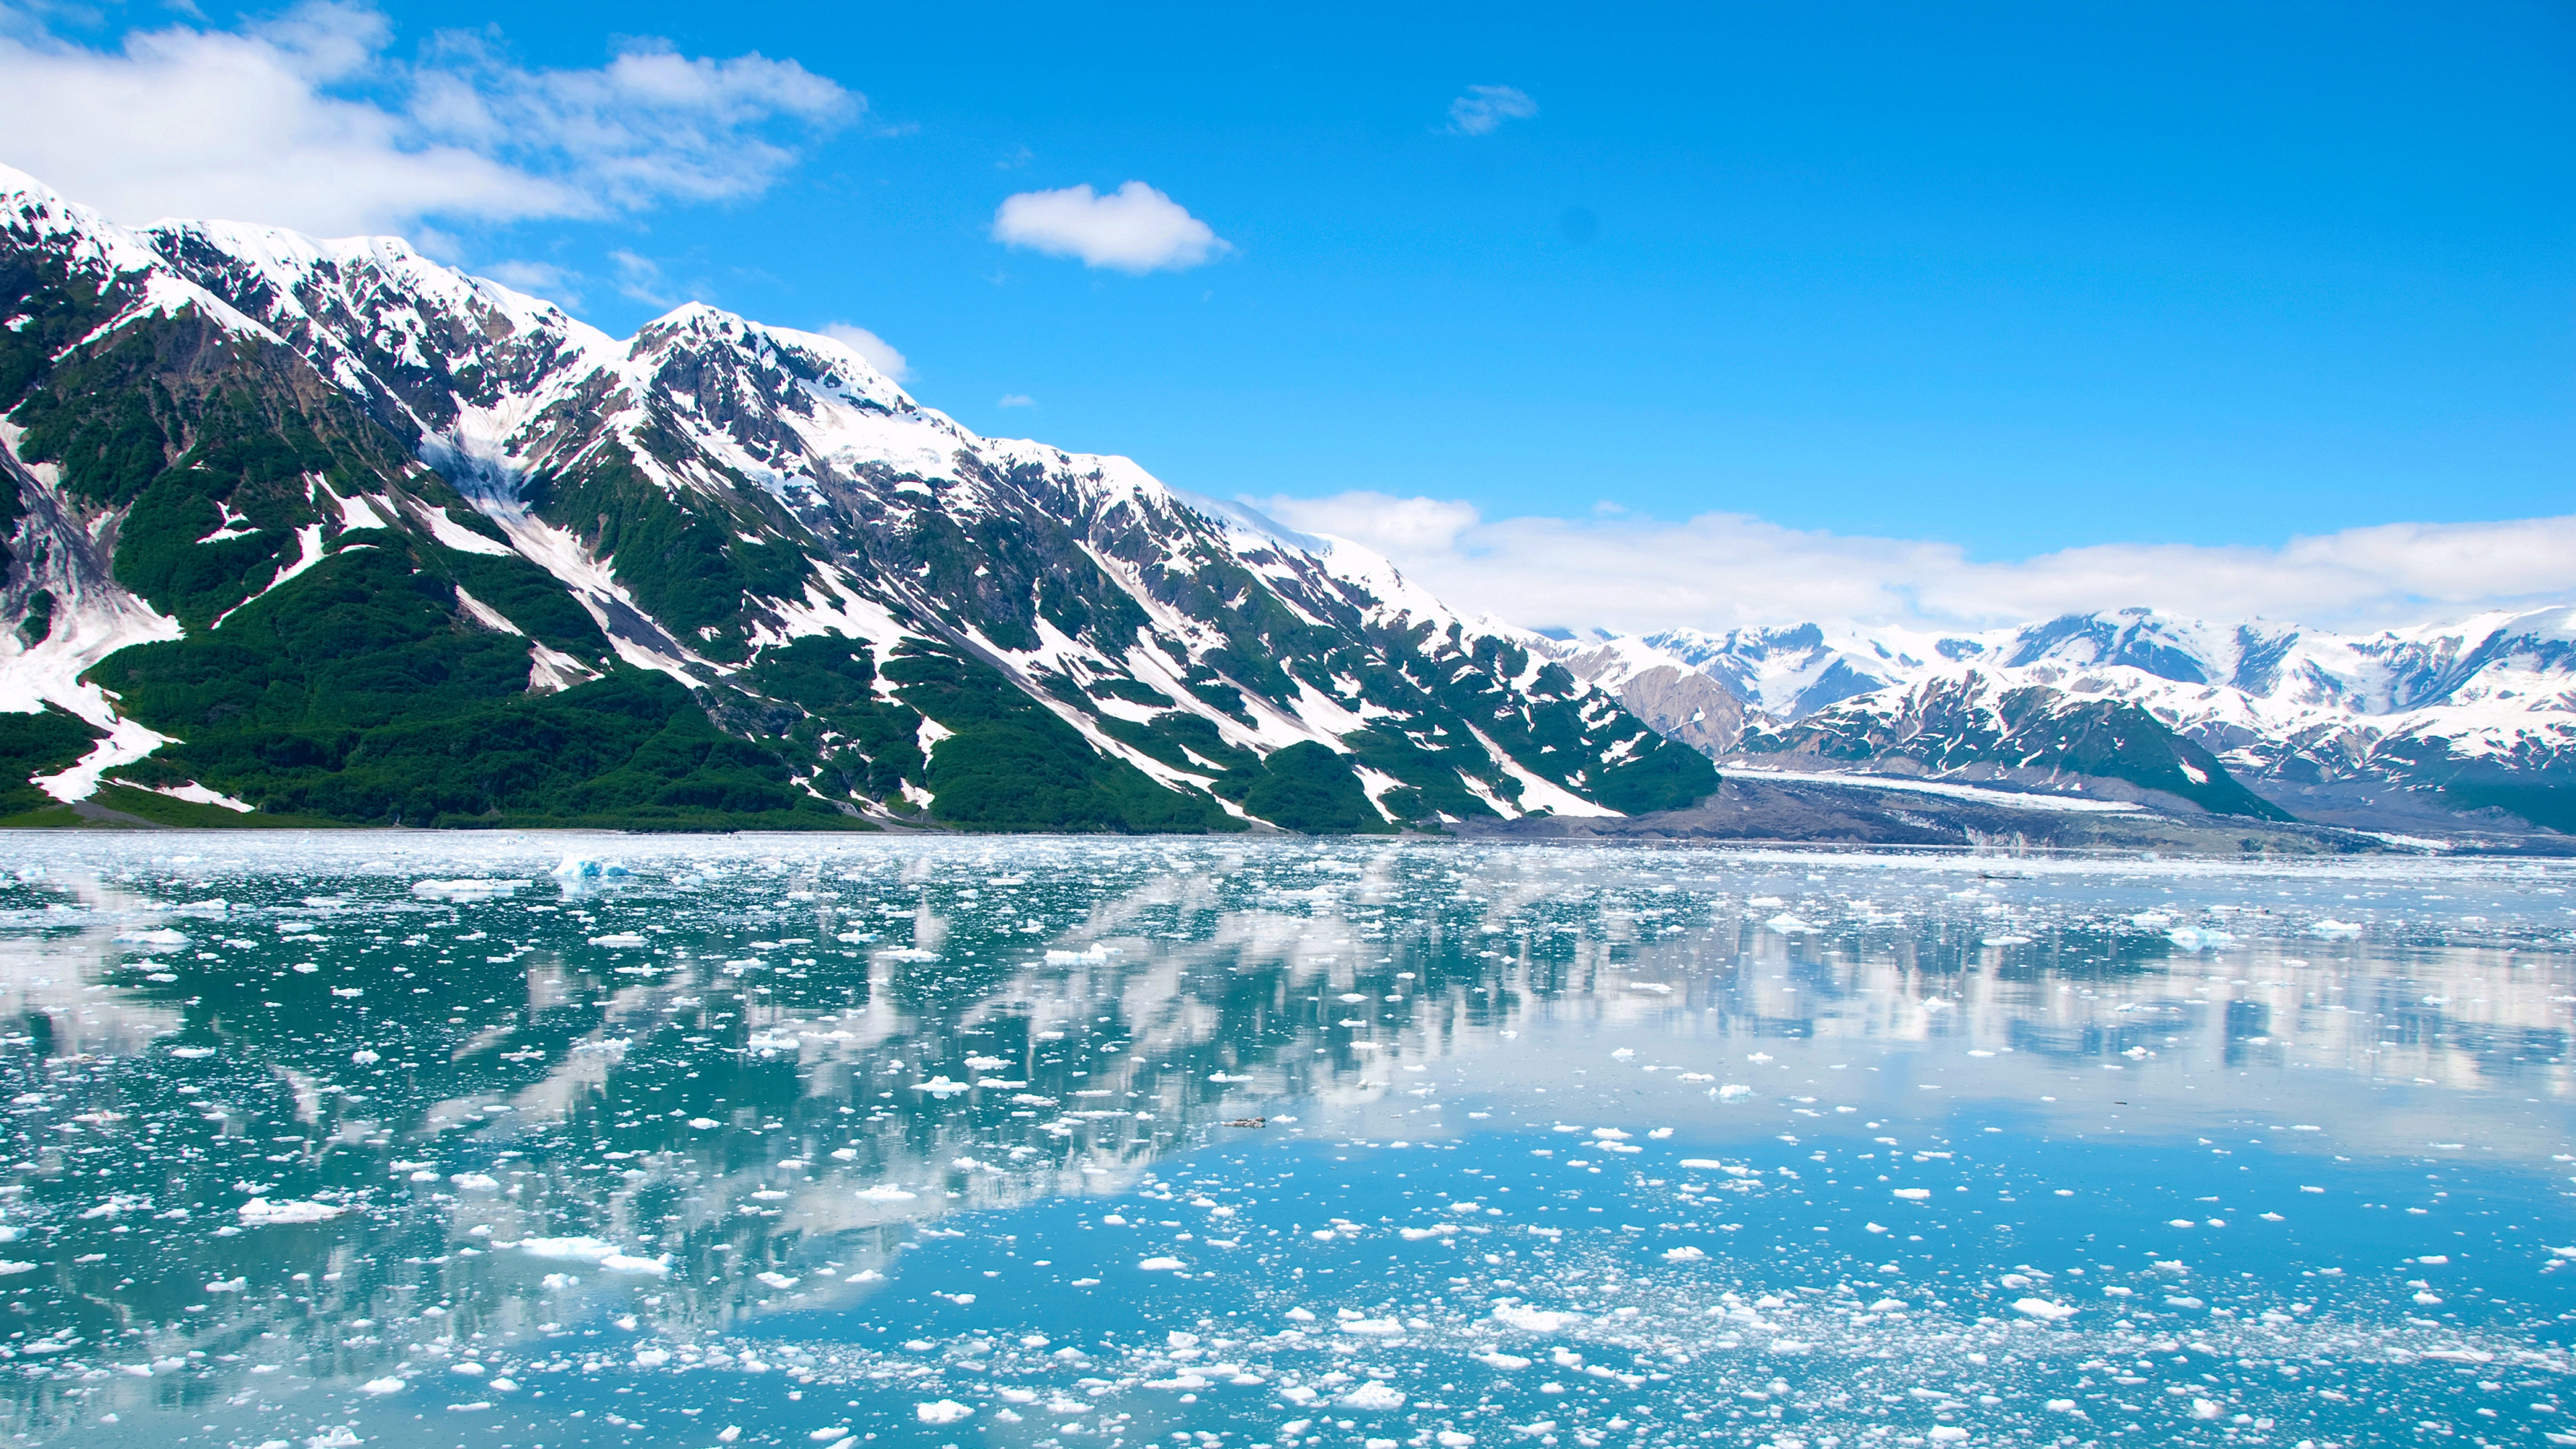 3840x2160 Download wallpaper alaska glacier mountains